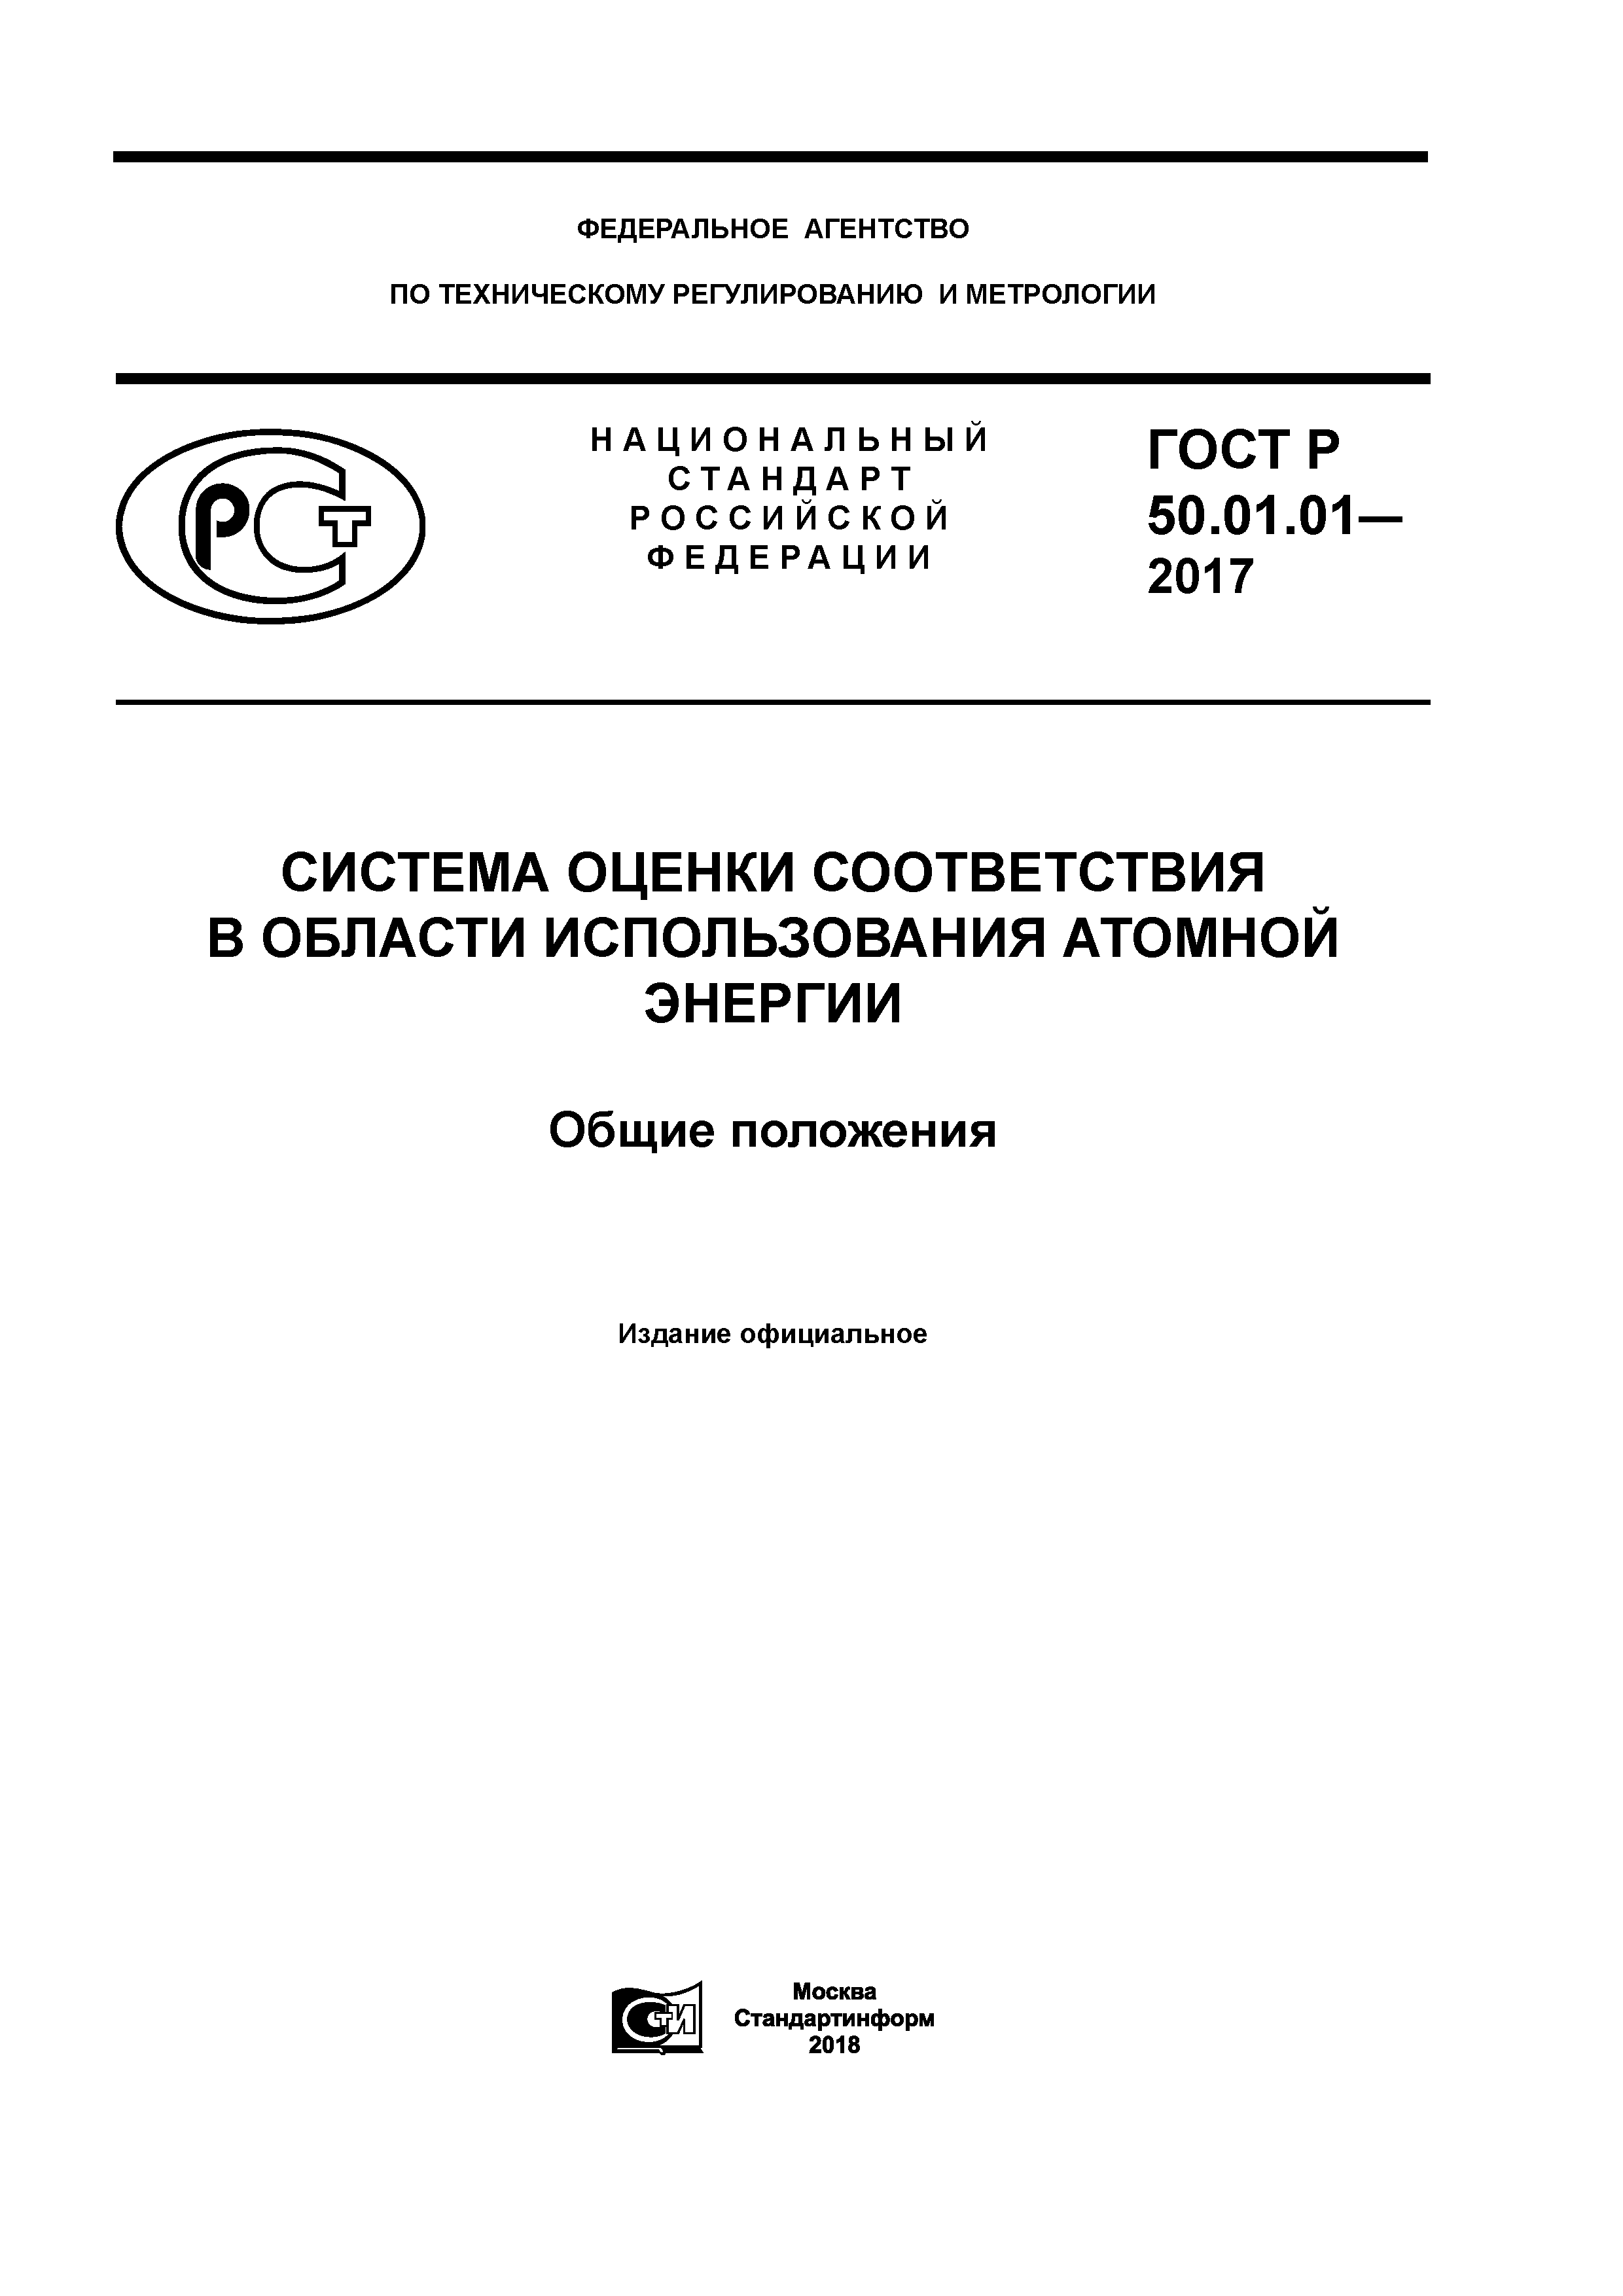 ГОСТ Р 50.01.01-2017